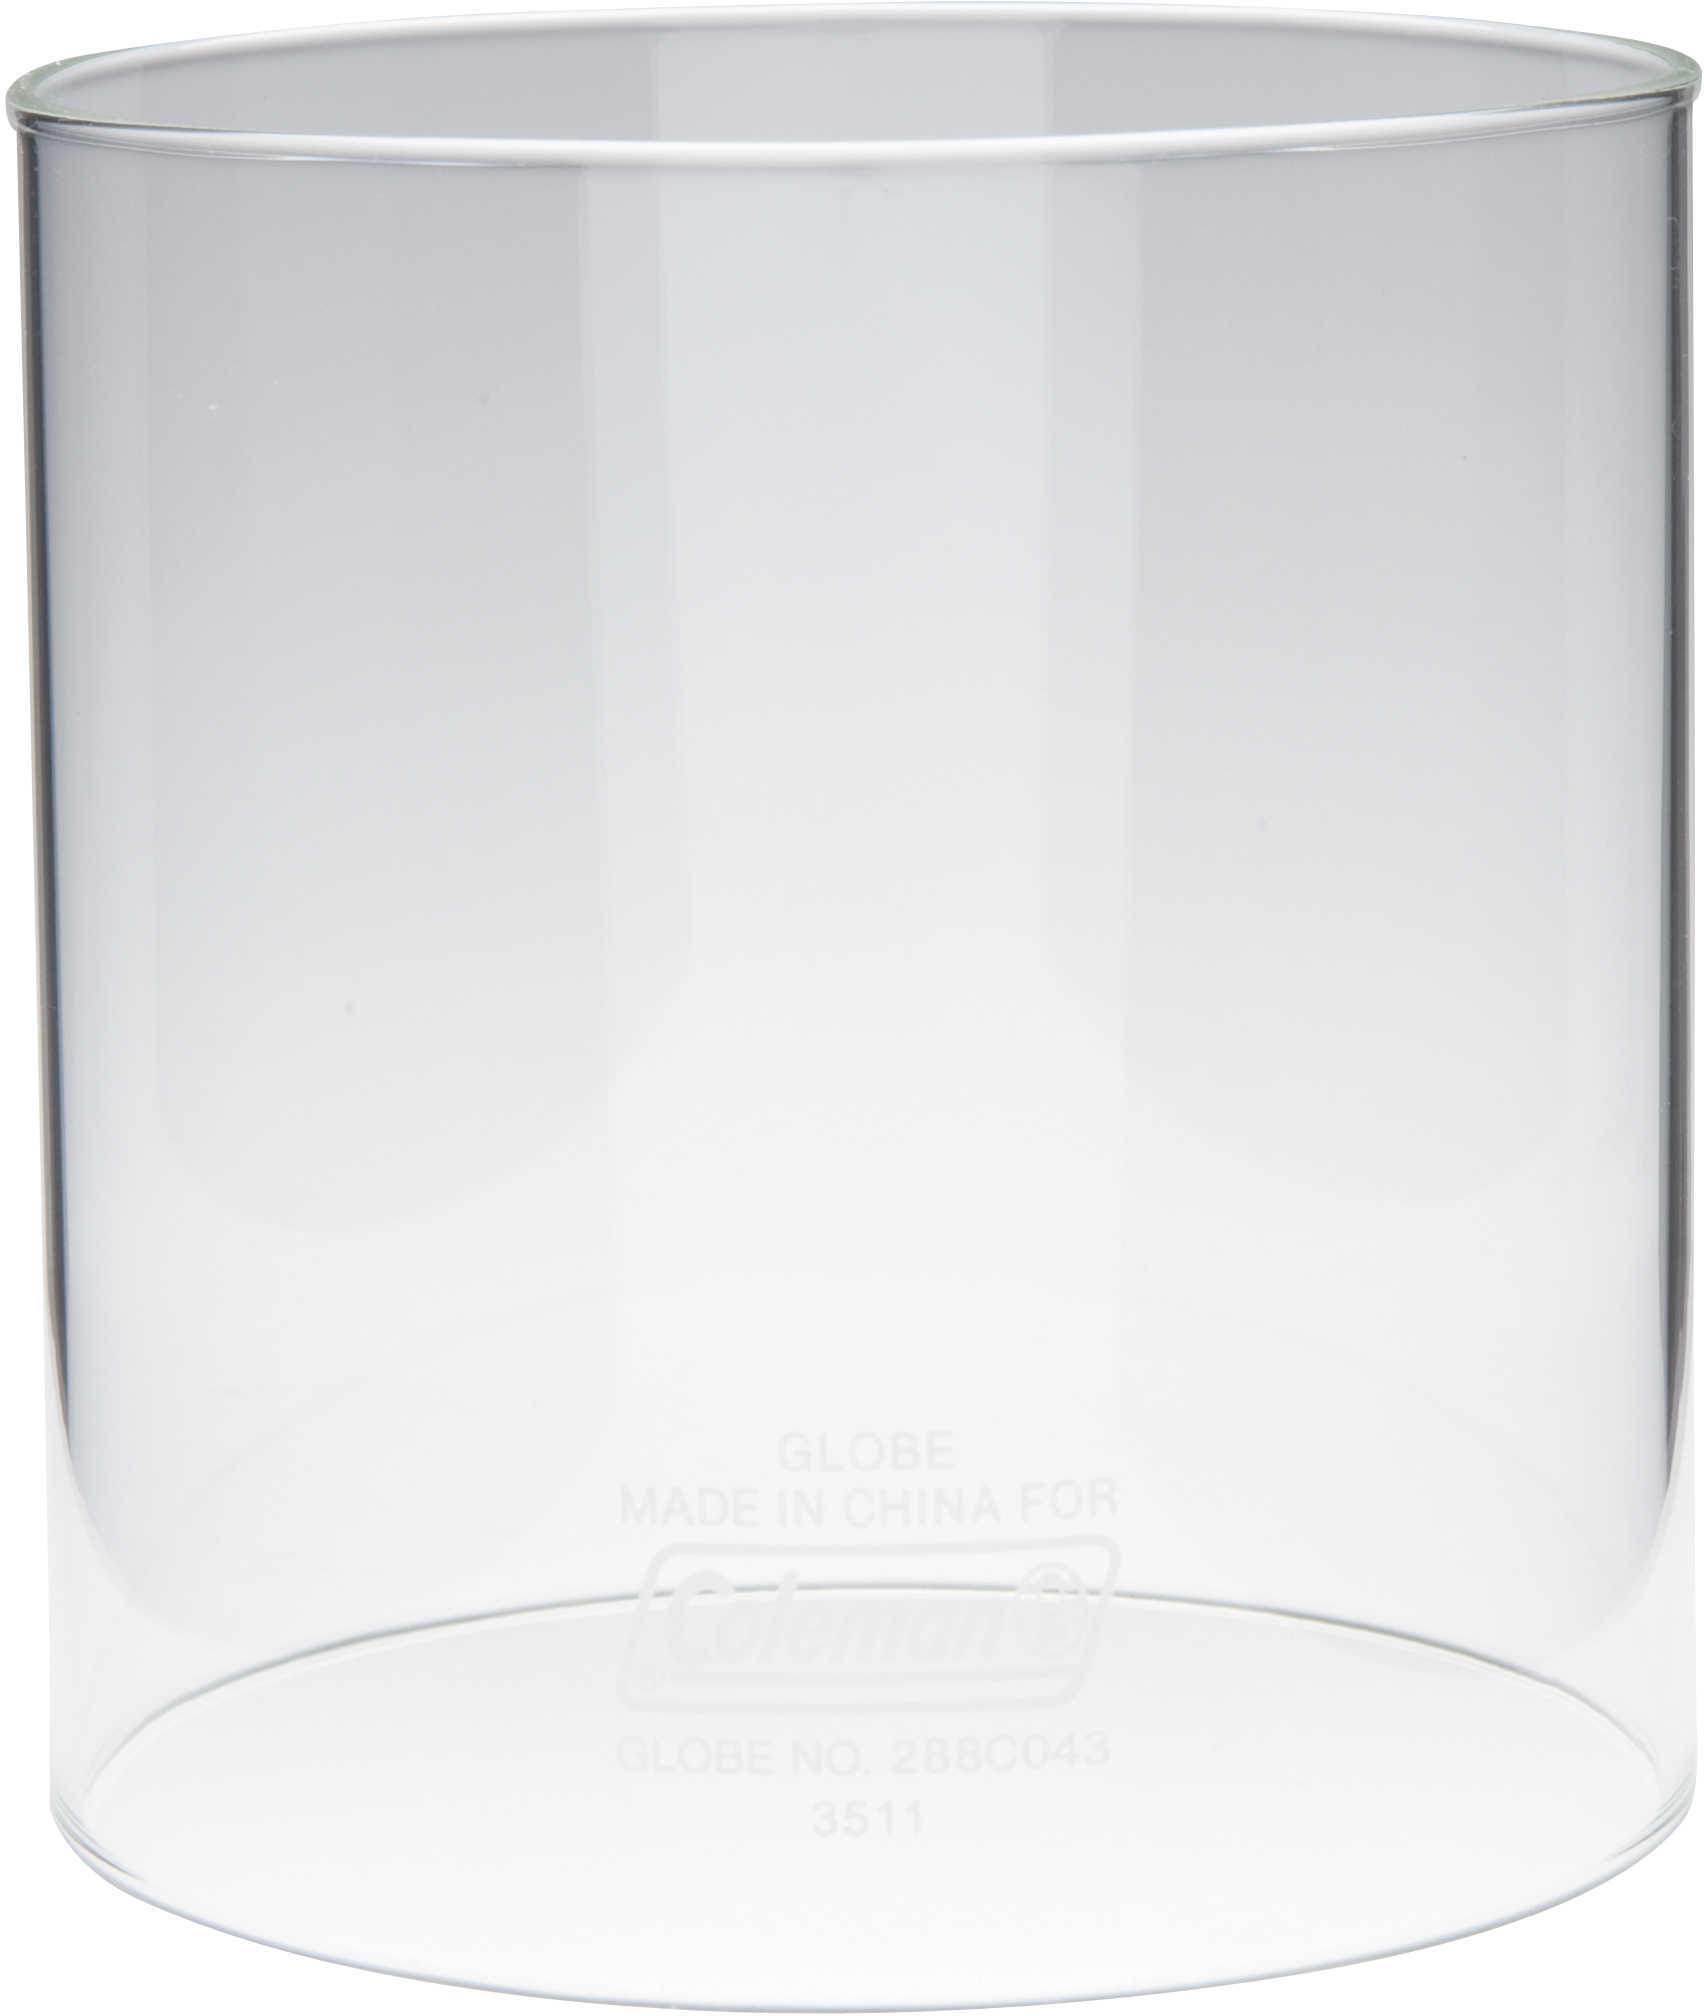 Coleman Fuel Lantern Globes Standard Shape Strght 2000026611